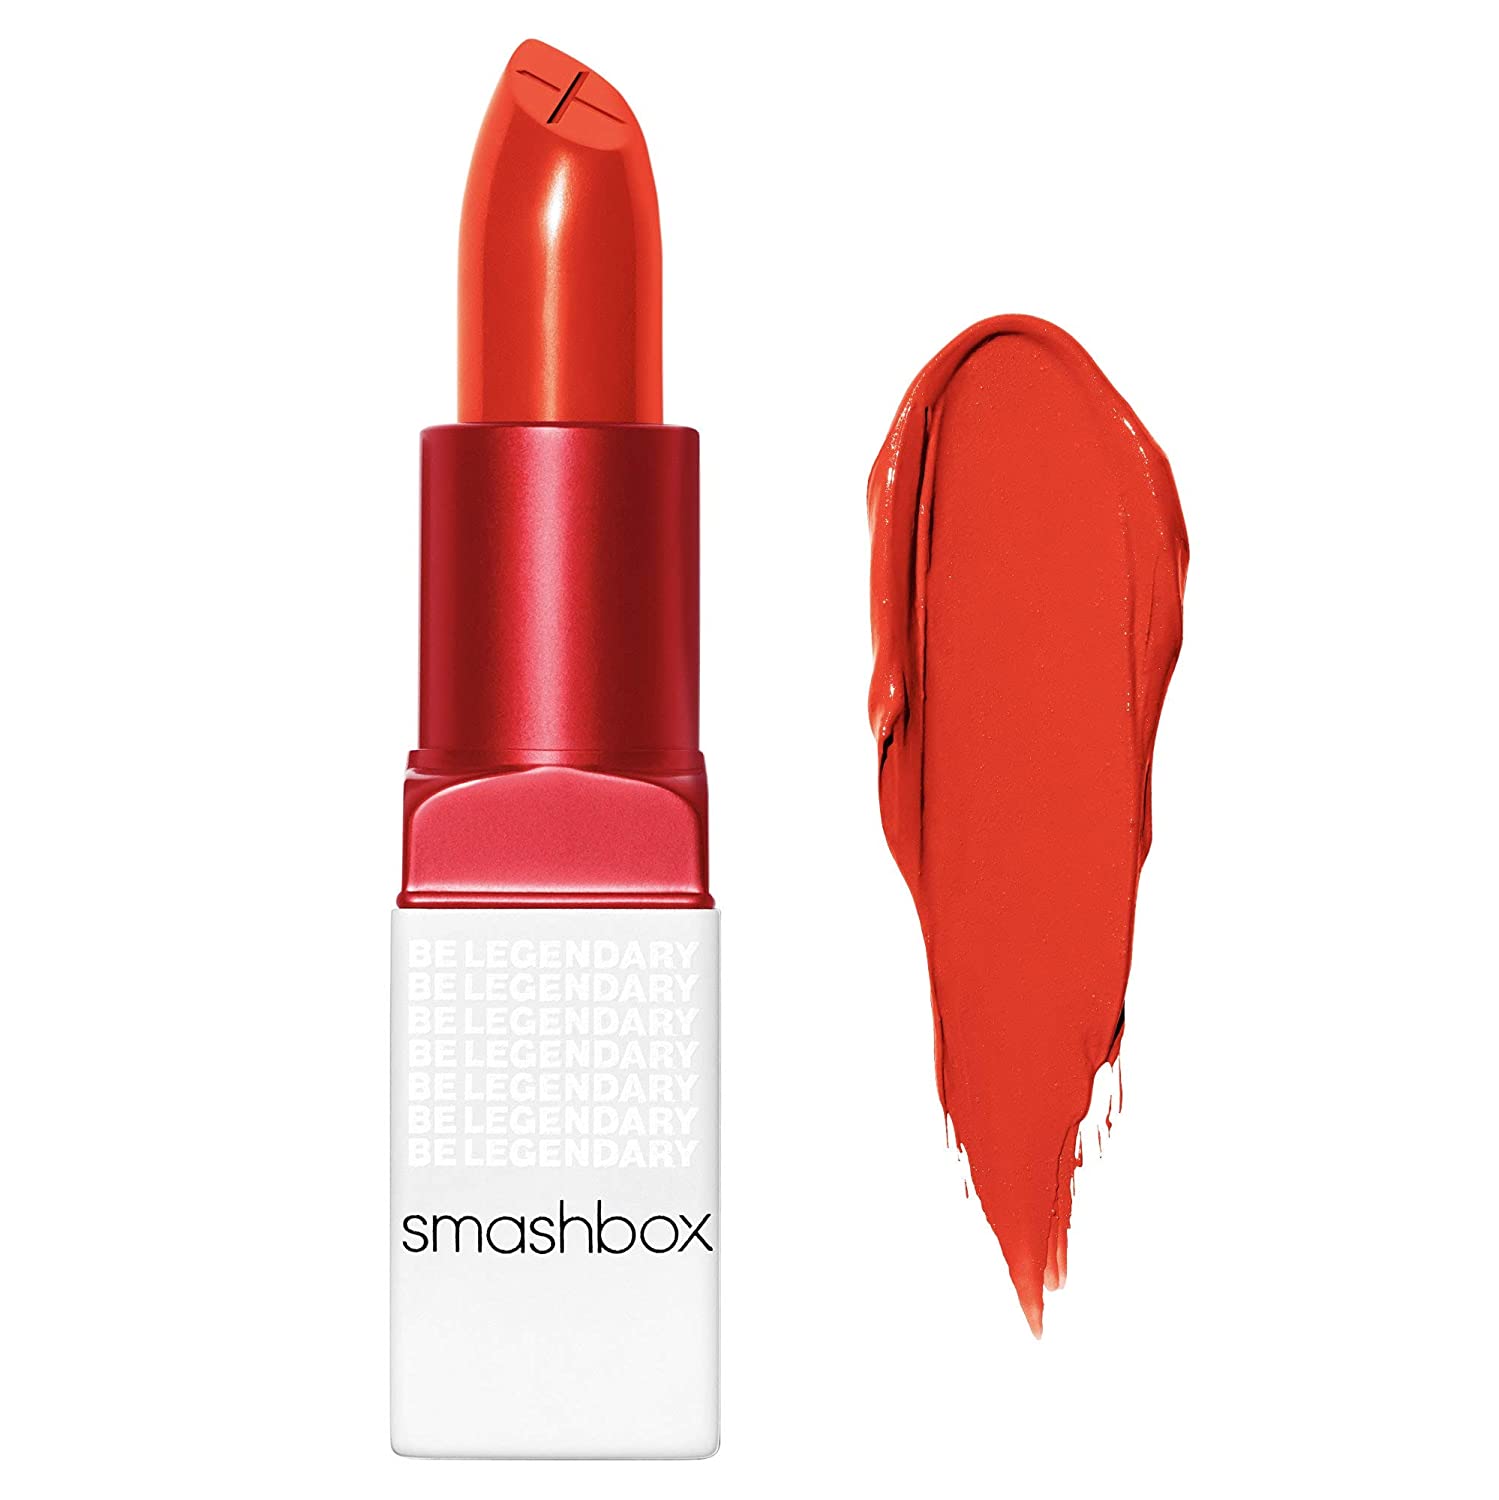 Smashbox Be Legendary Prime Plush Lipstick in Unbridled